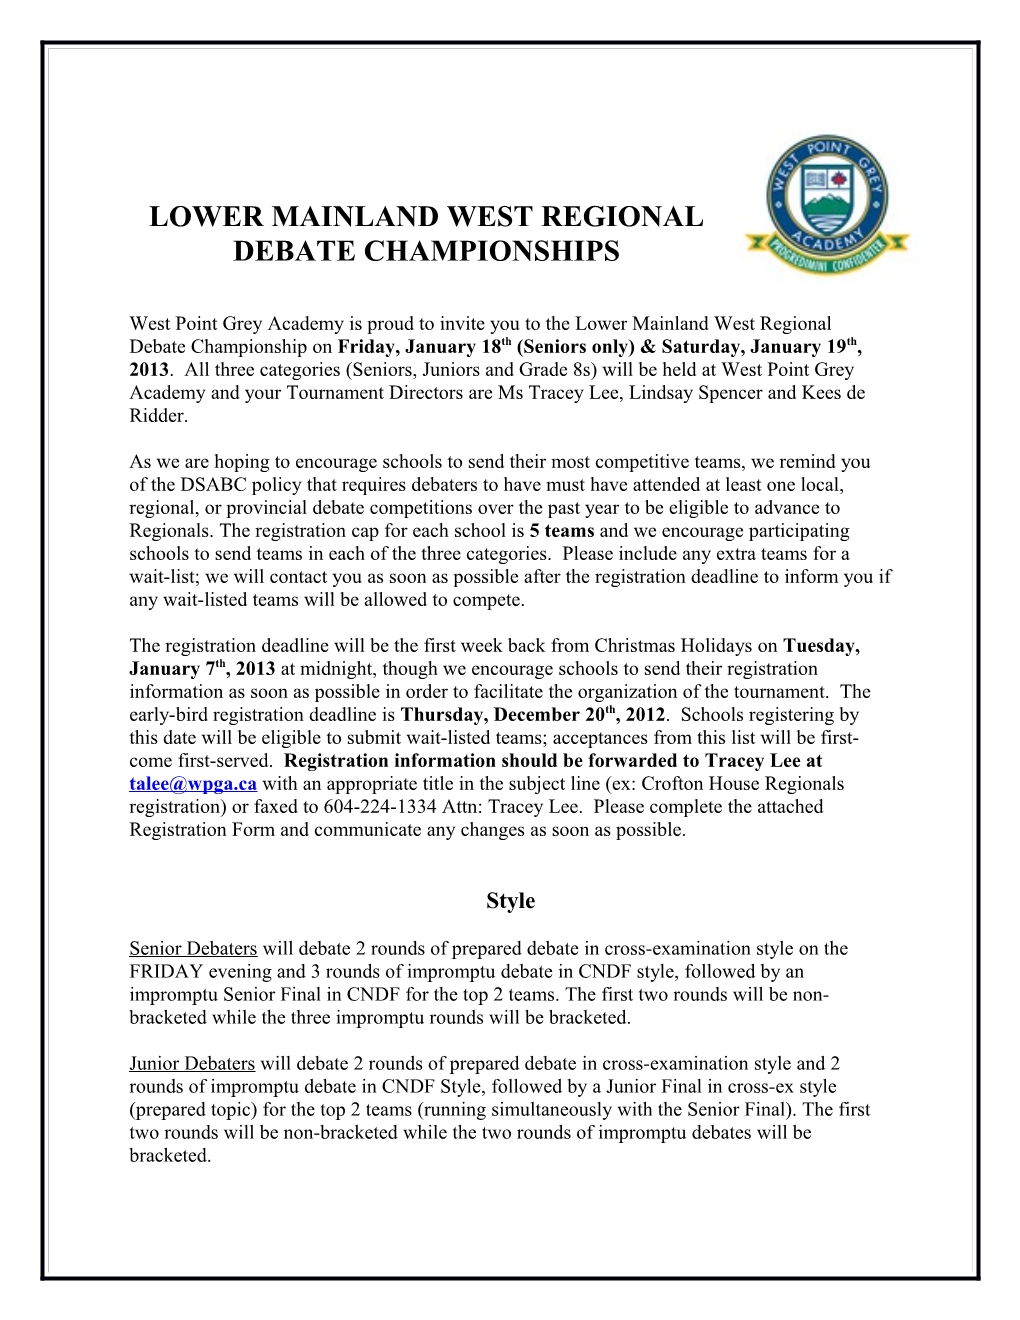 Lower Mainland West Regional Debate Championships